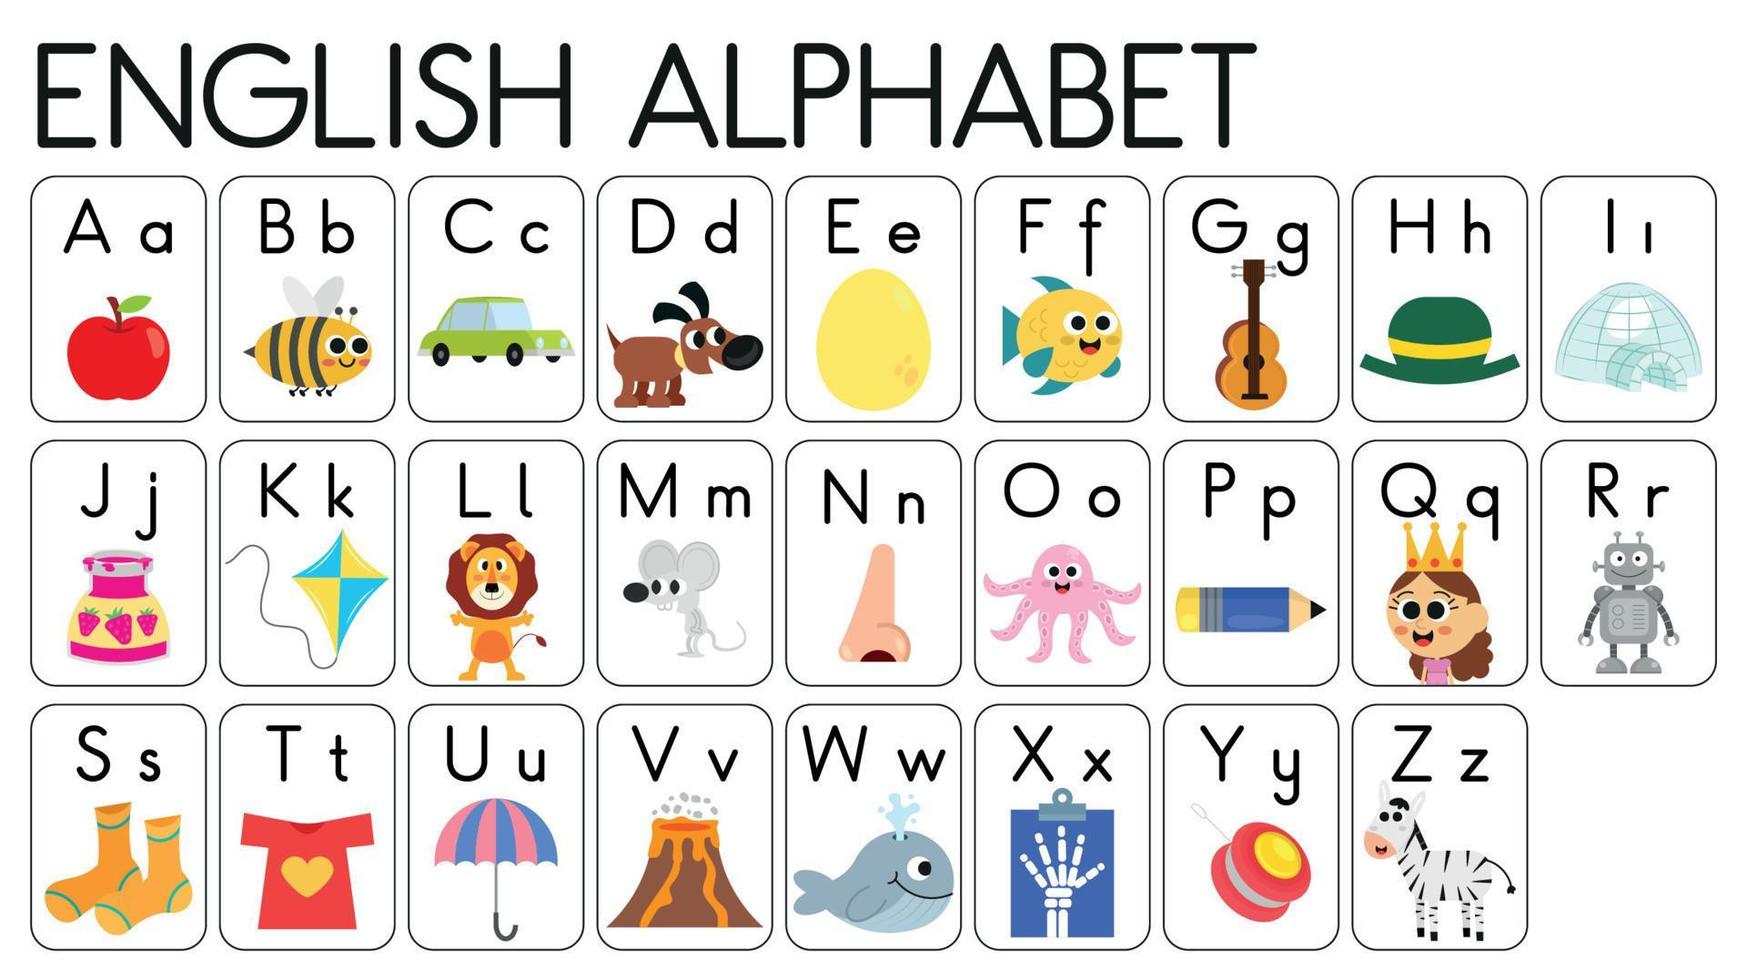 Engels alfabet geïllustreerd woordenboek. Engels alfabet geïllustreerd woordenboek voor kinderen. geïllustreerde Engelse alfabetflitskaarten. vector